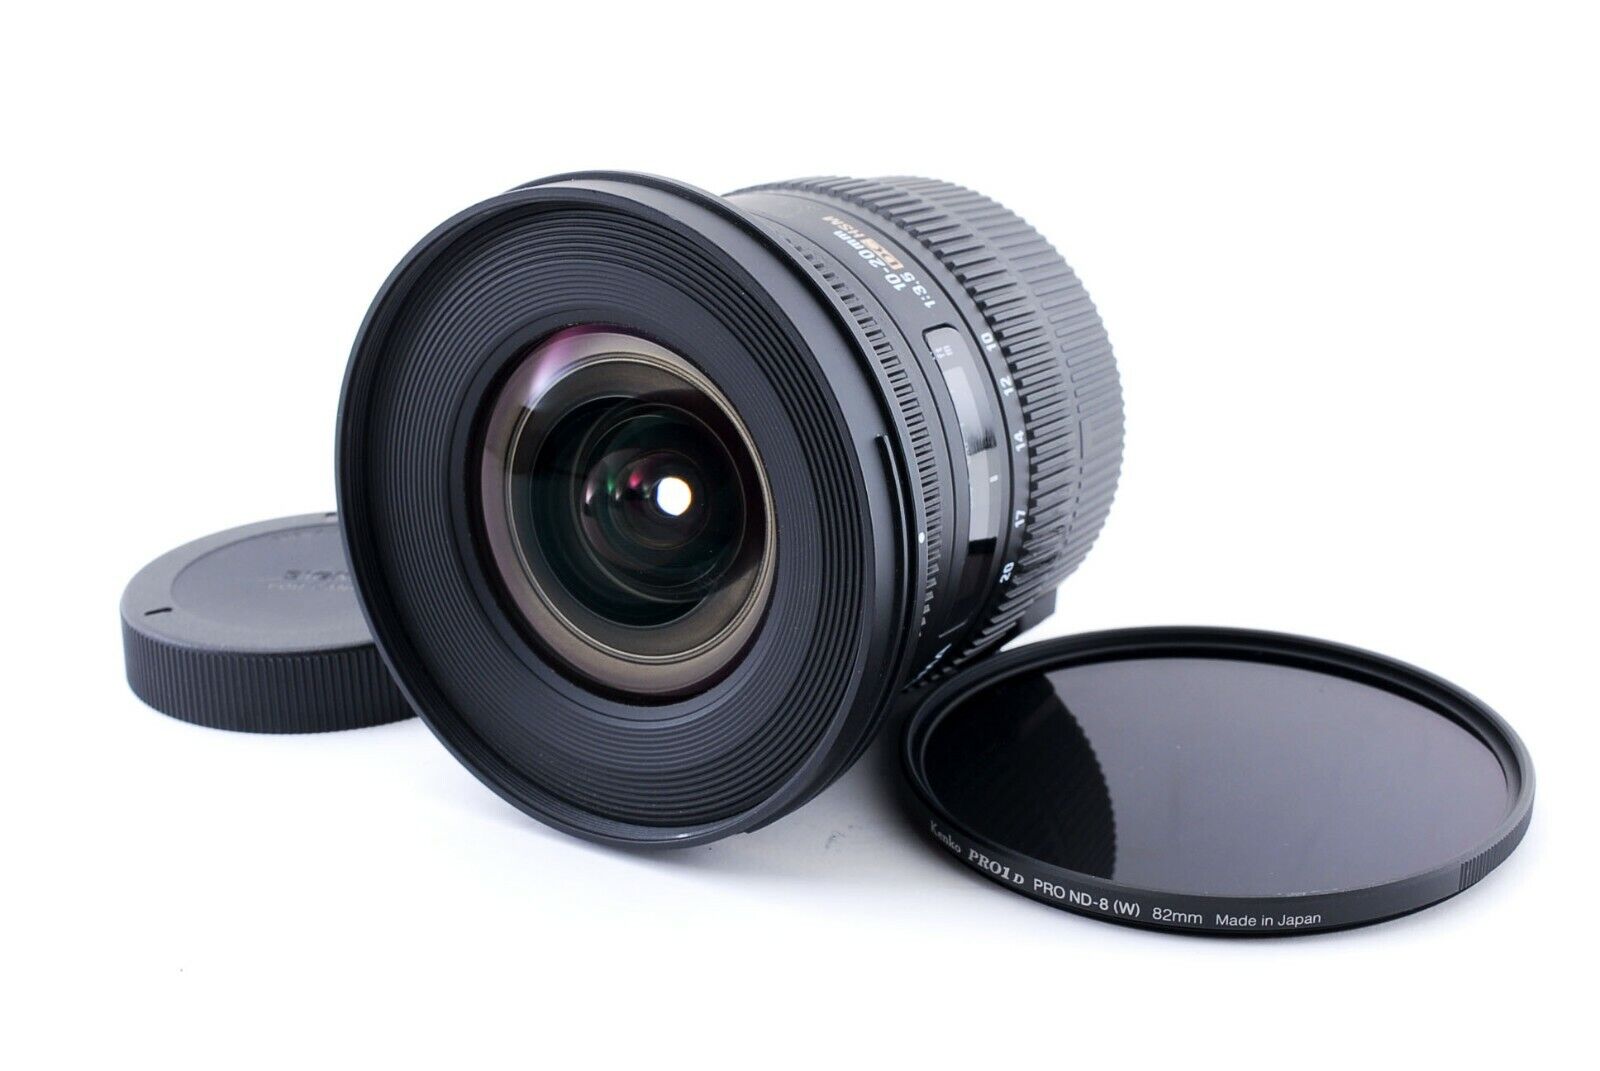 Sigma EX 10-20mm f/3.5 HSM EX DC Lens For Canon for sale online | eBay